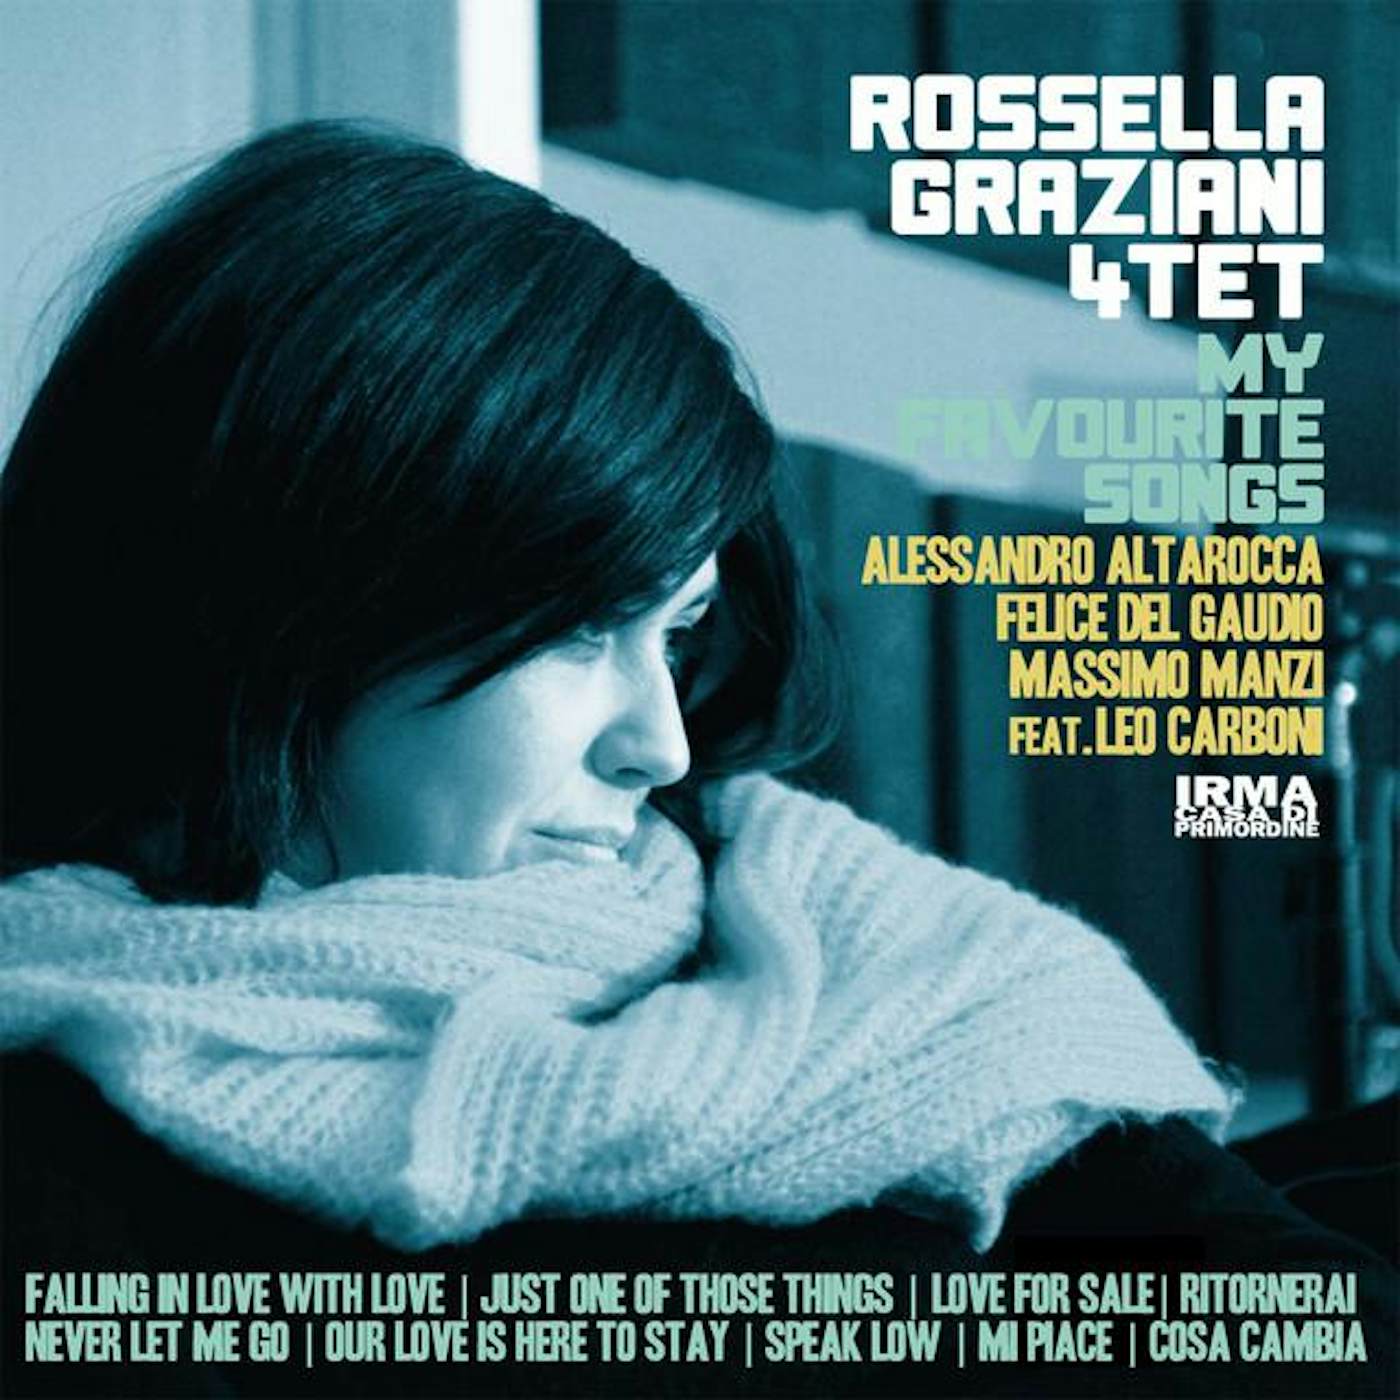 Rossella Graziani 4Tet